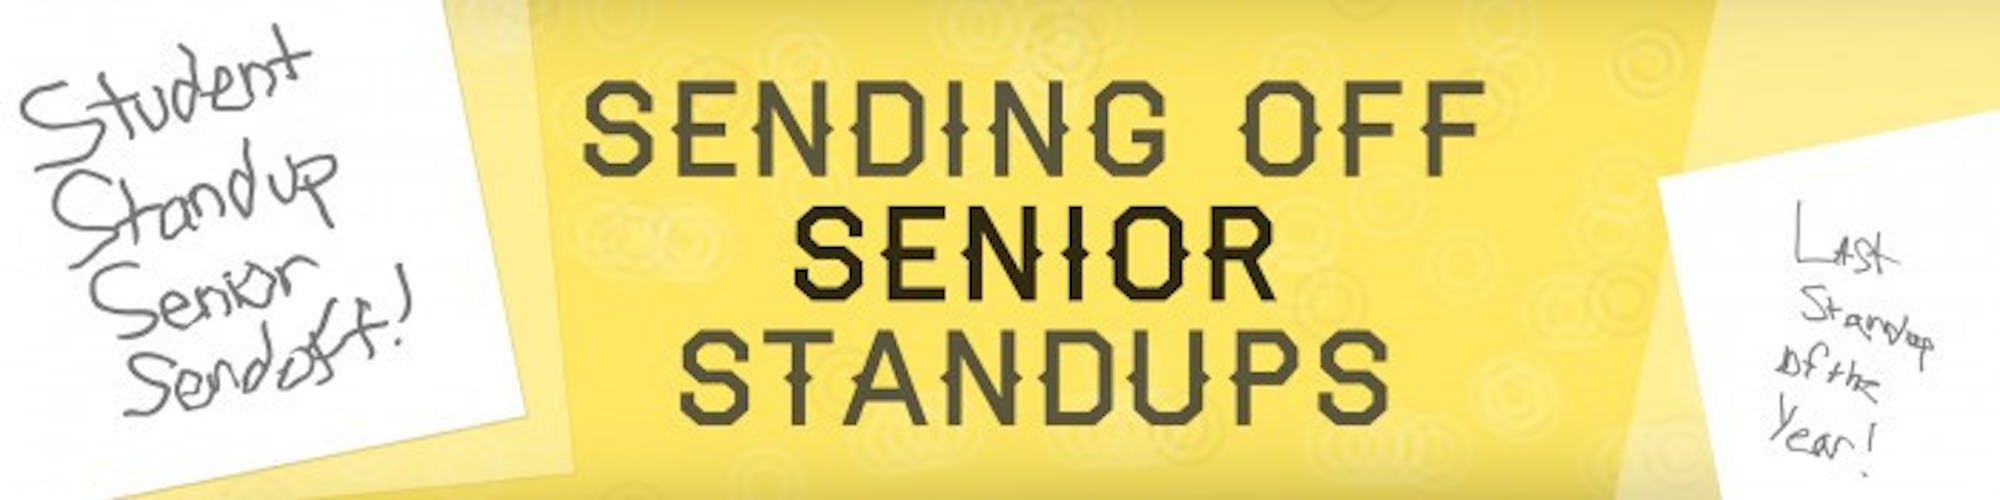 Sending_Off_Senior_Standups_Web